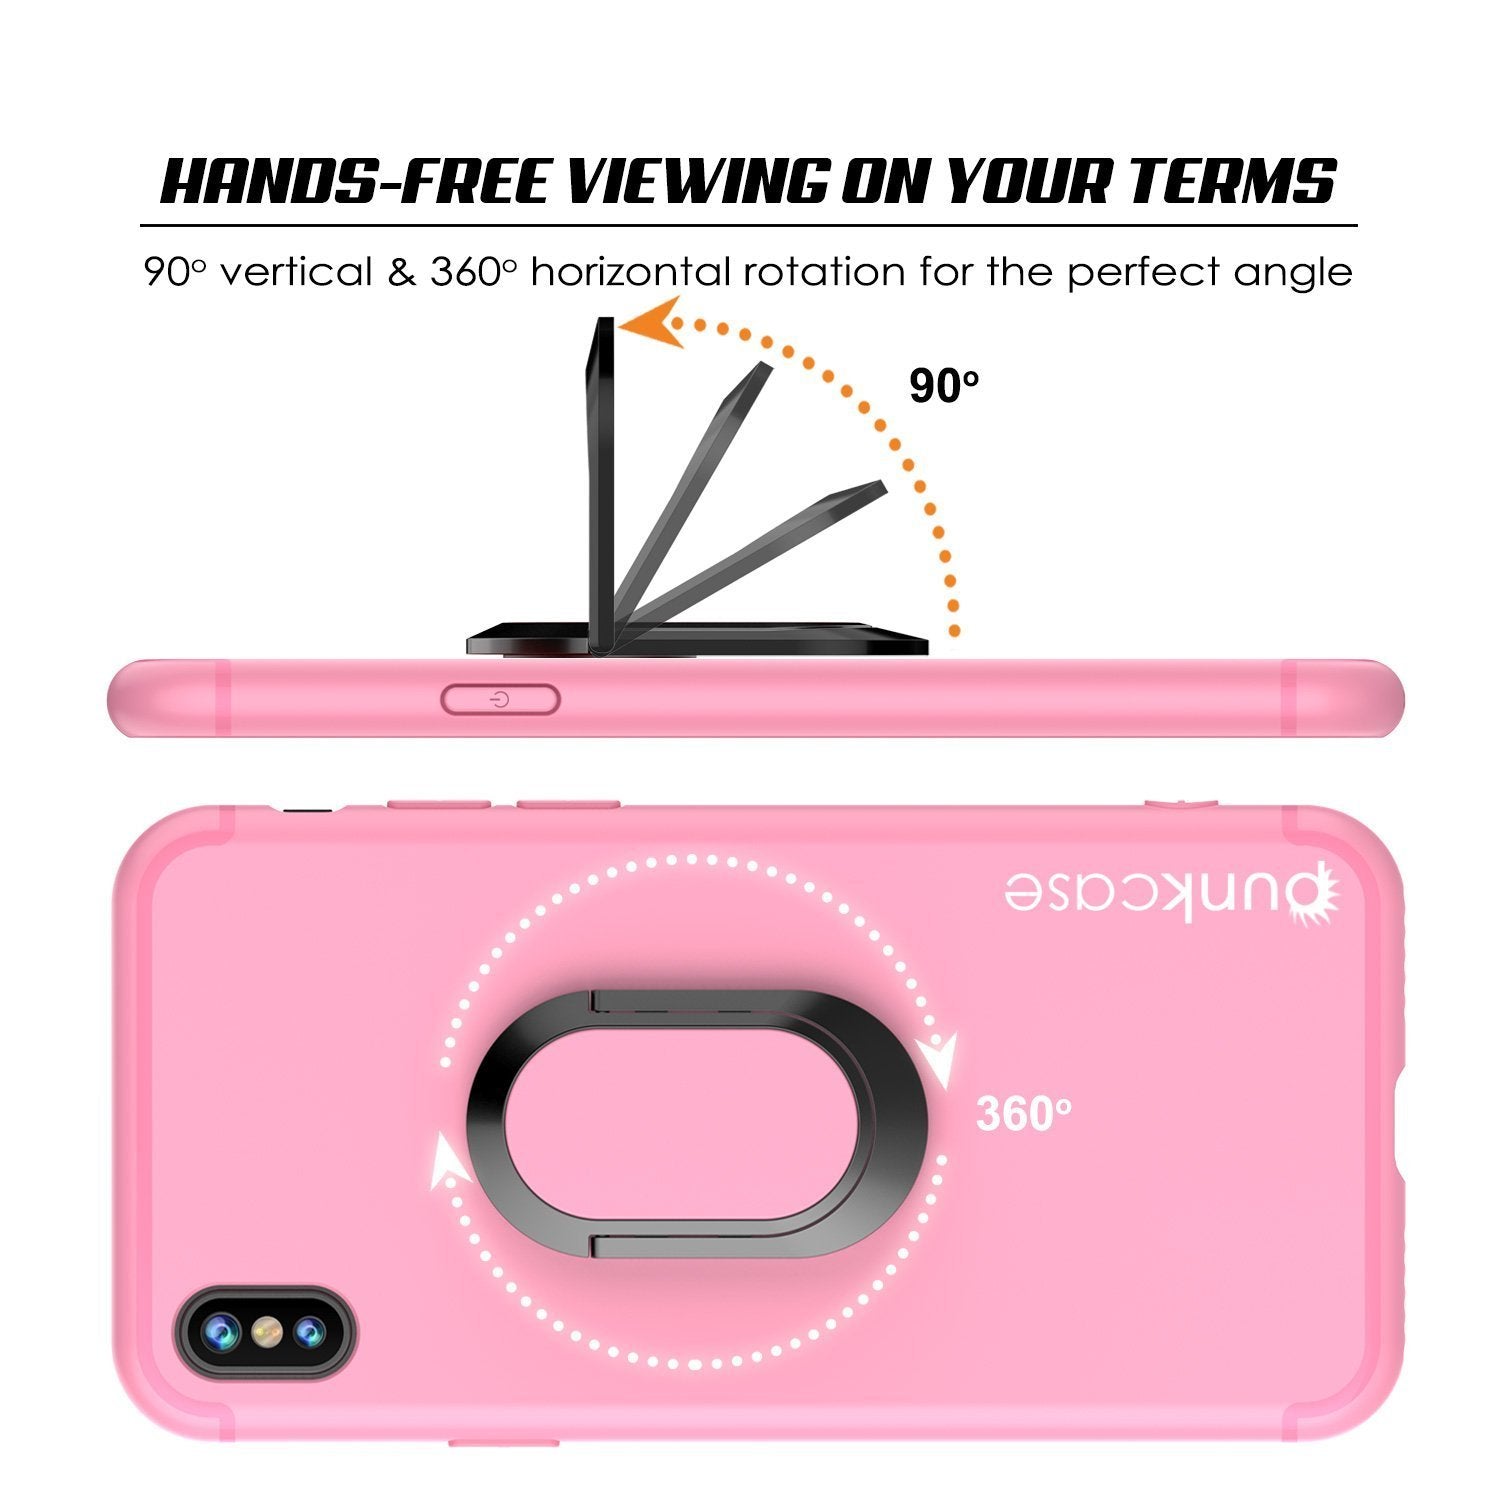 iPhone X Punkcase, Magnetix Protective TPU Case W/ Kickstand, [pink]